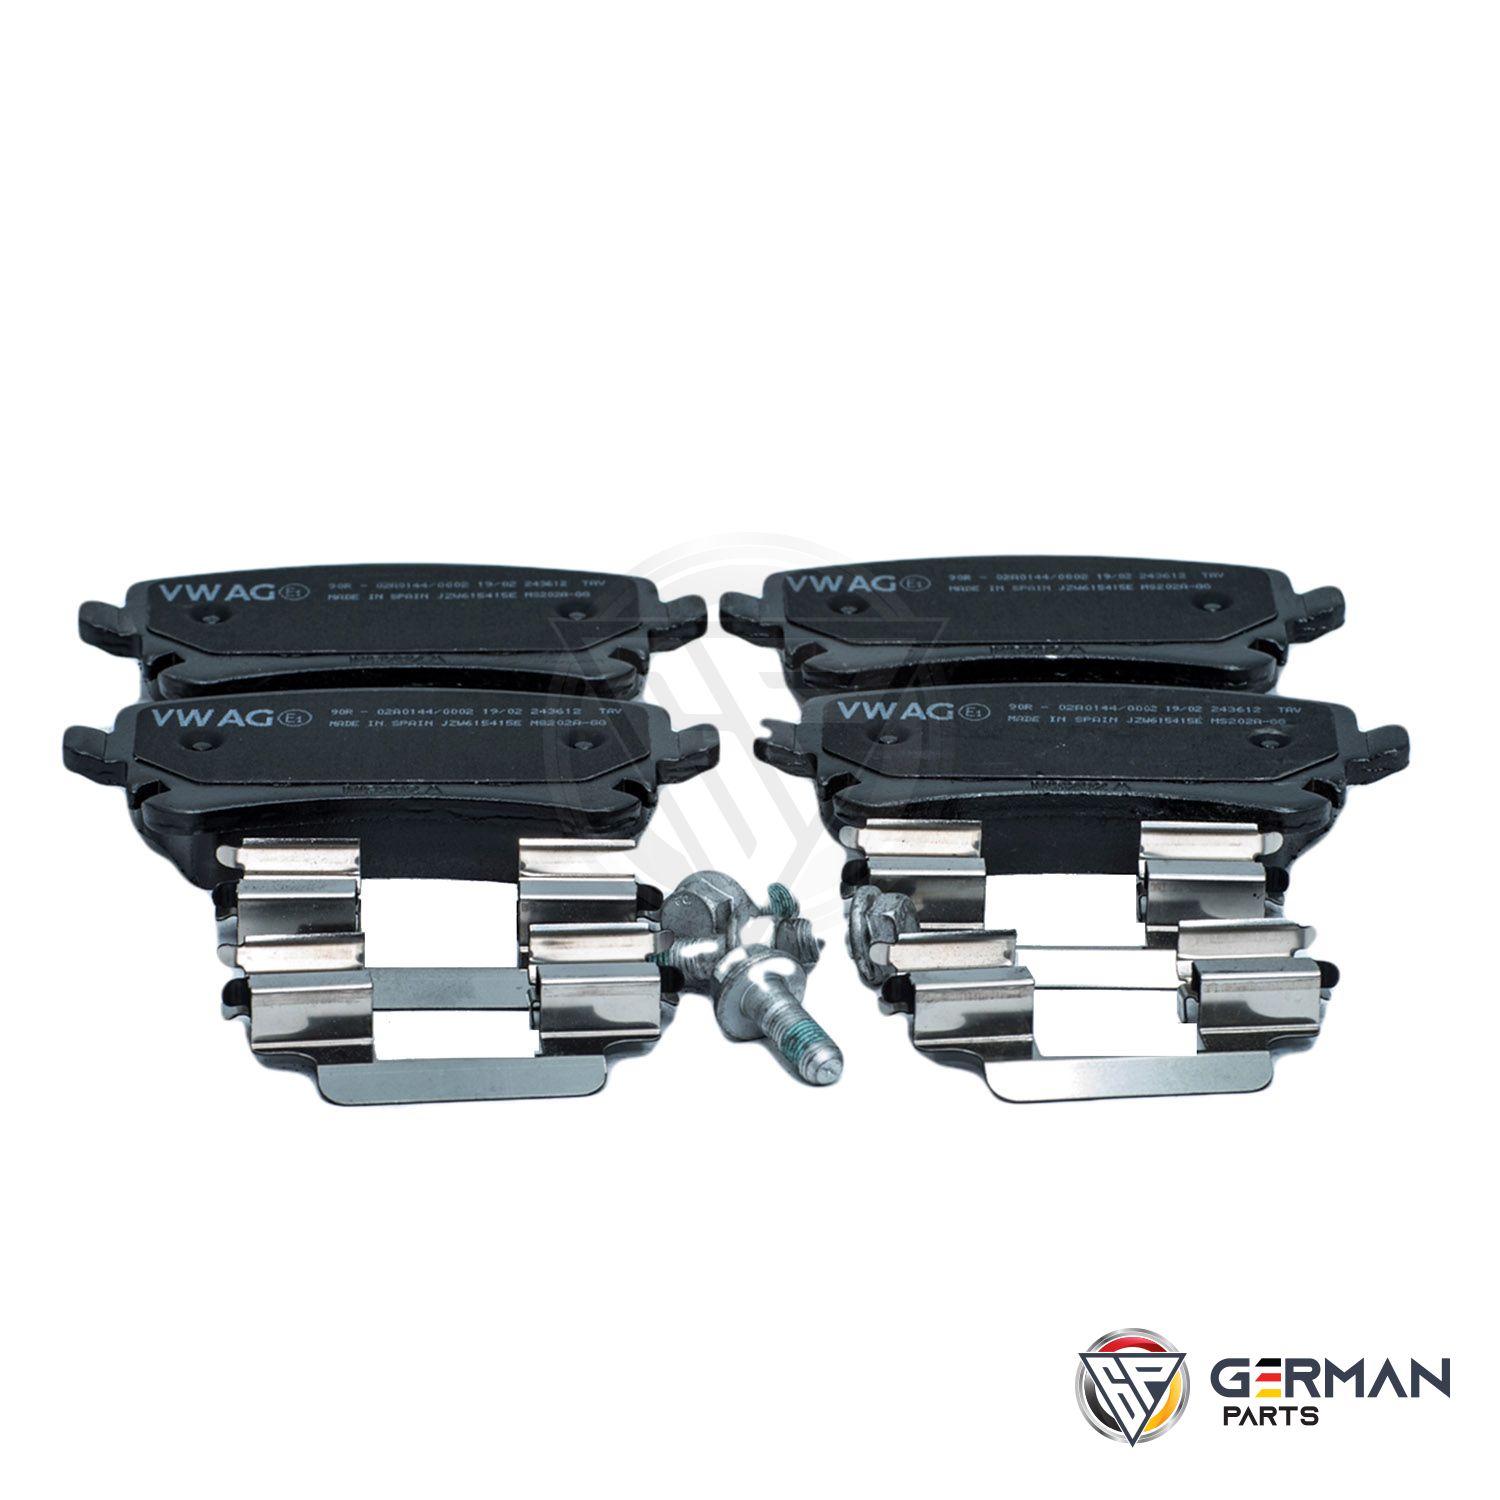 Buy Audi Volkswagen Rear Brake Pad Set JZW698451L - German Parts